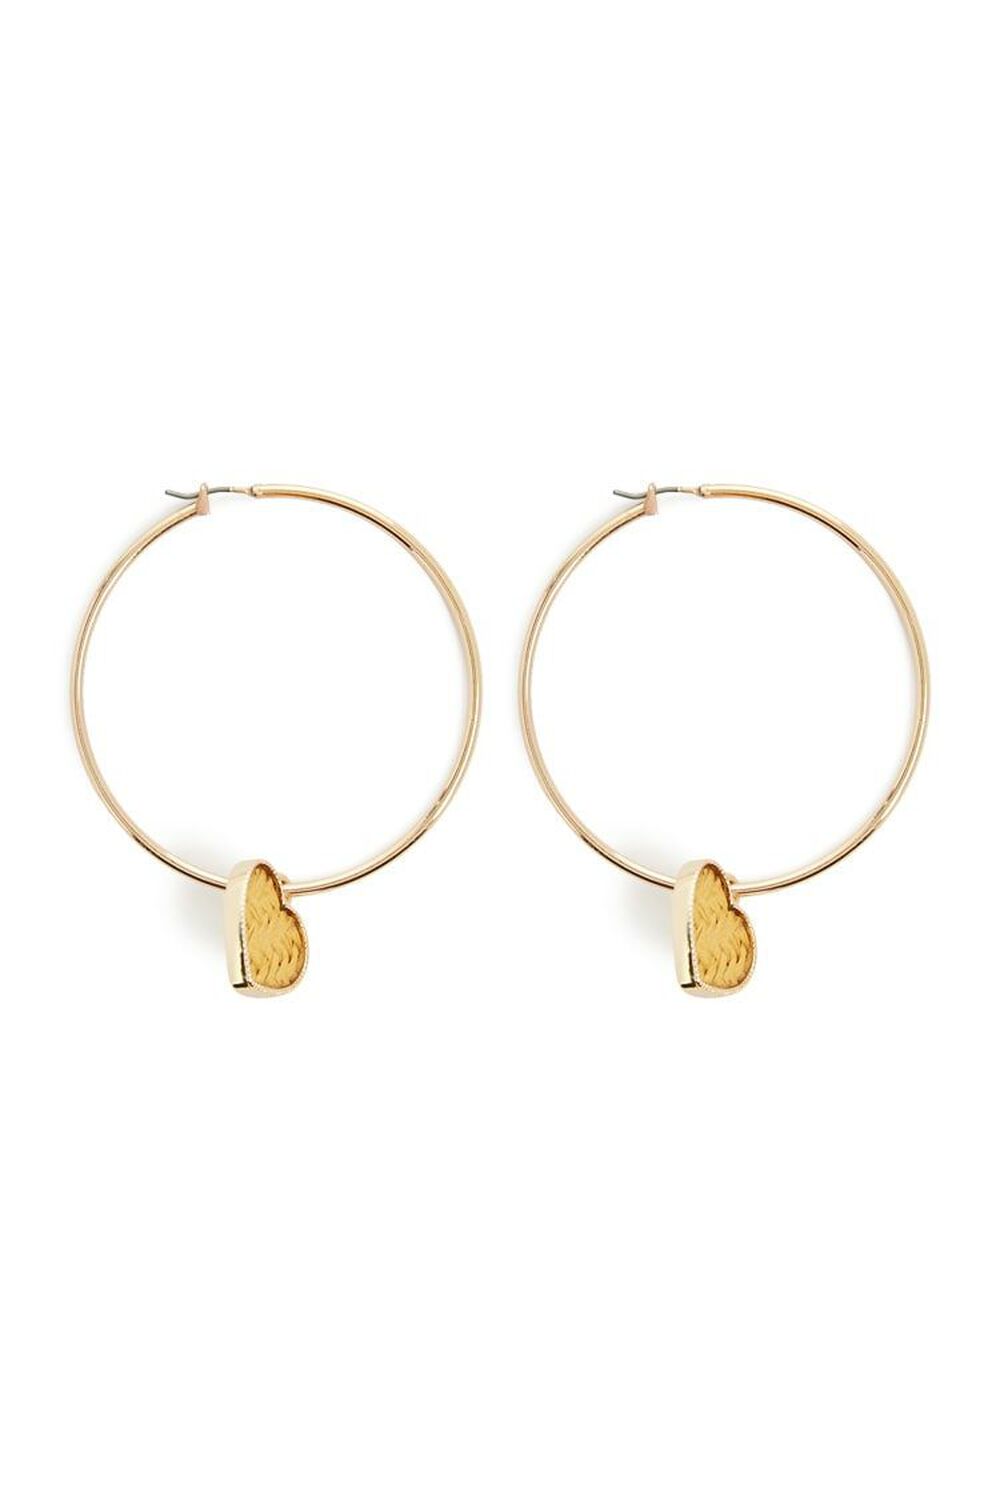 GOLD Heart Hoop Earrings, image 1